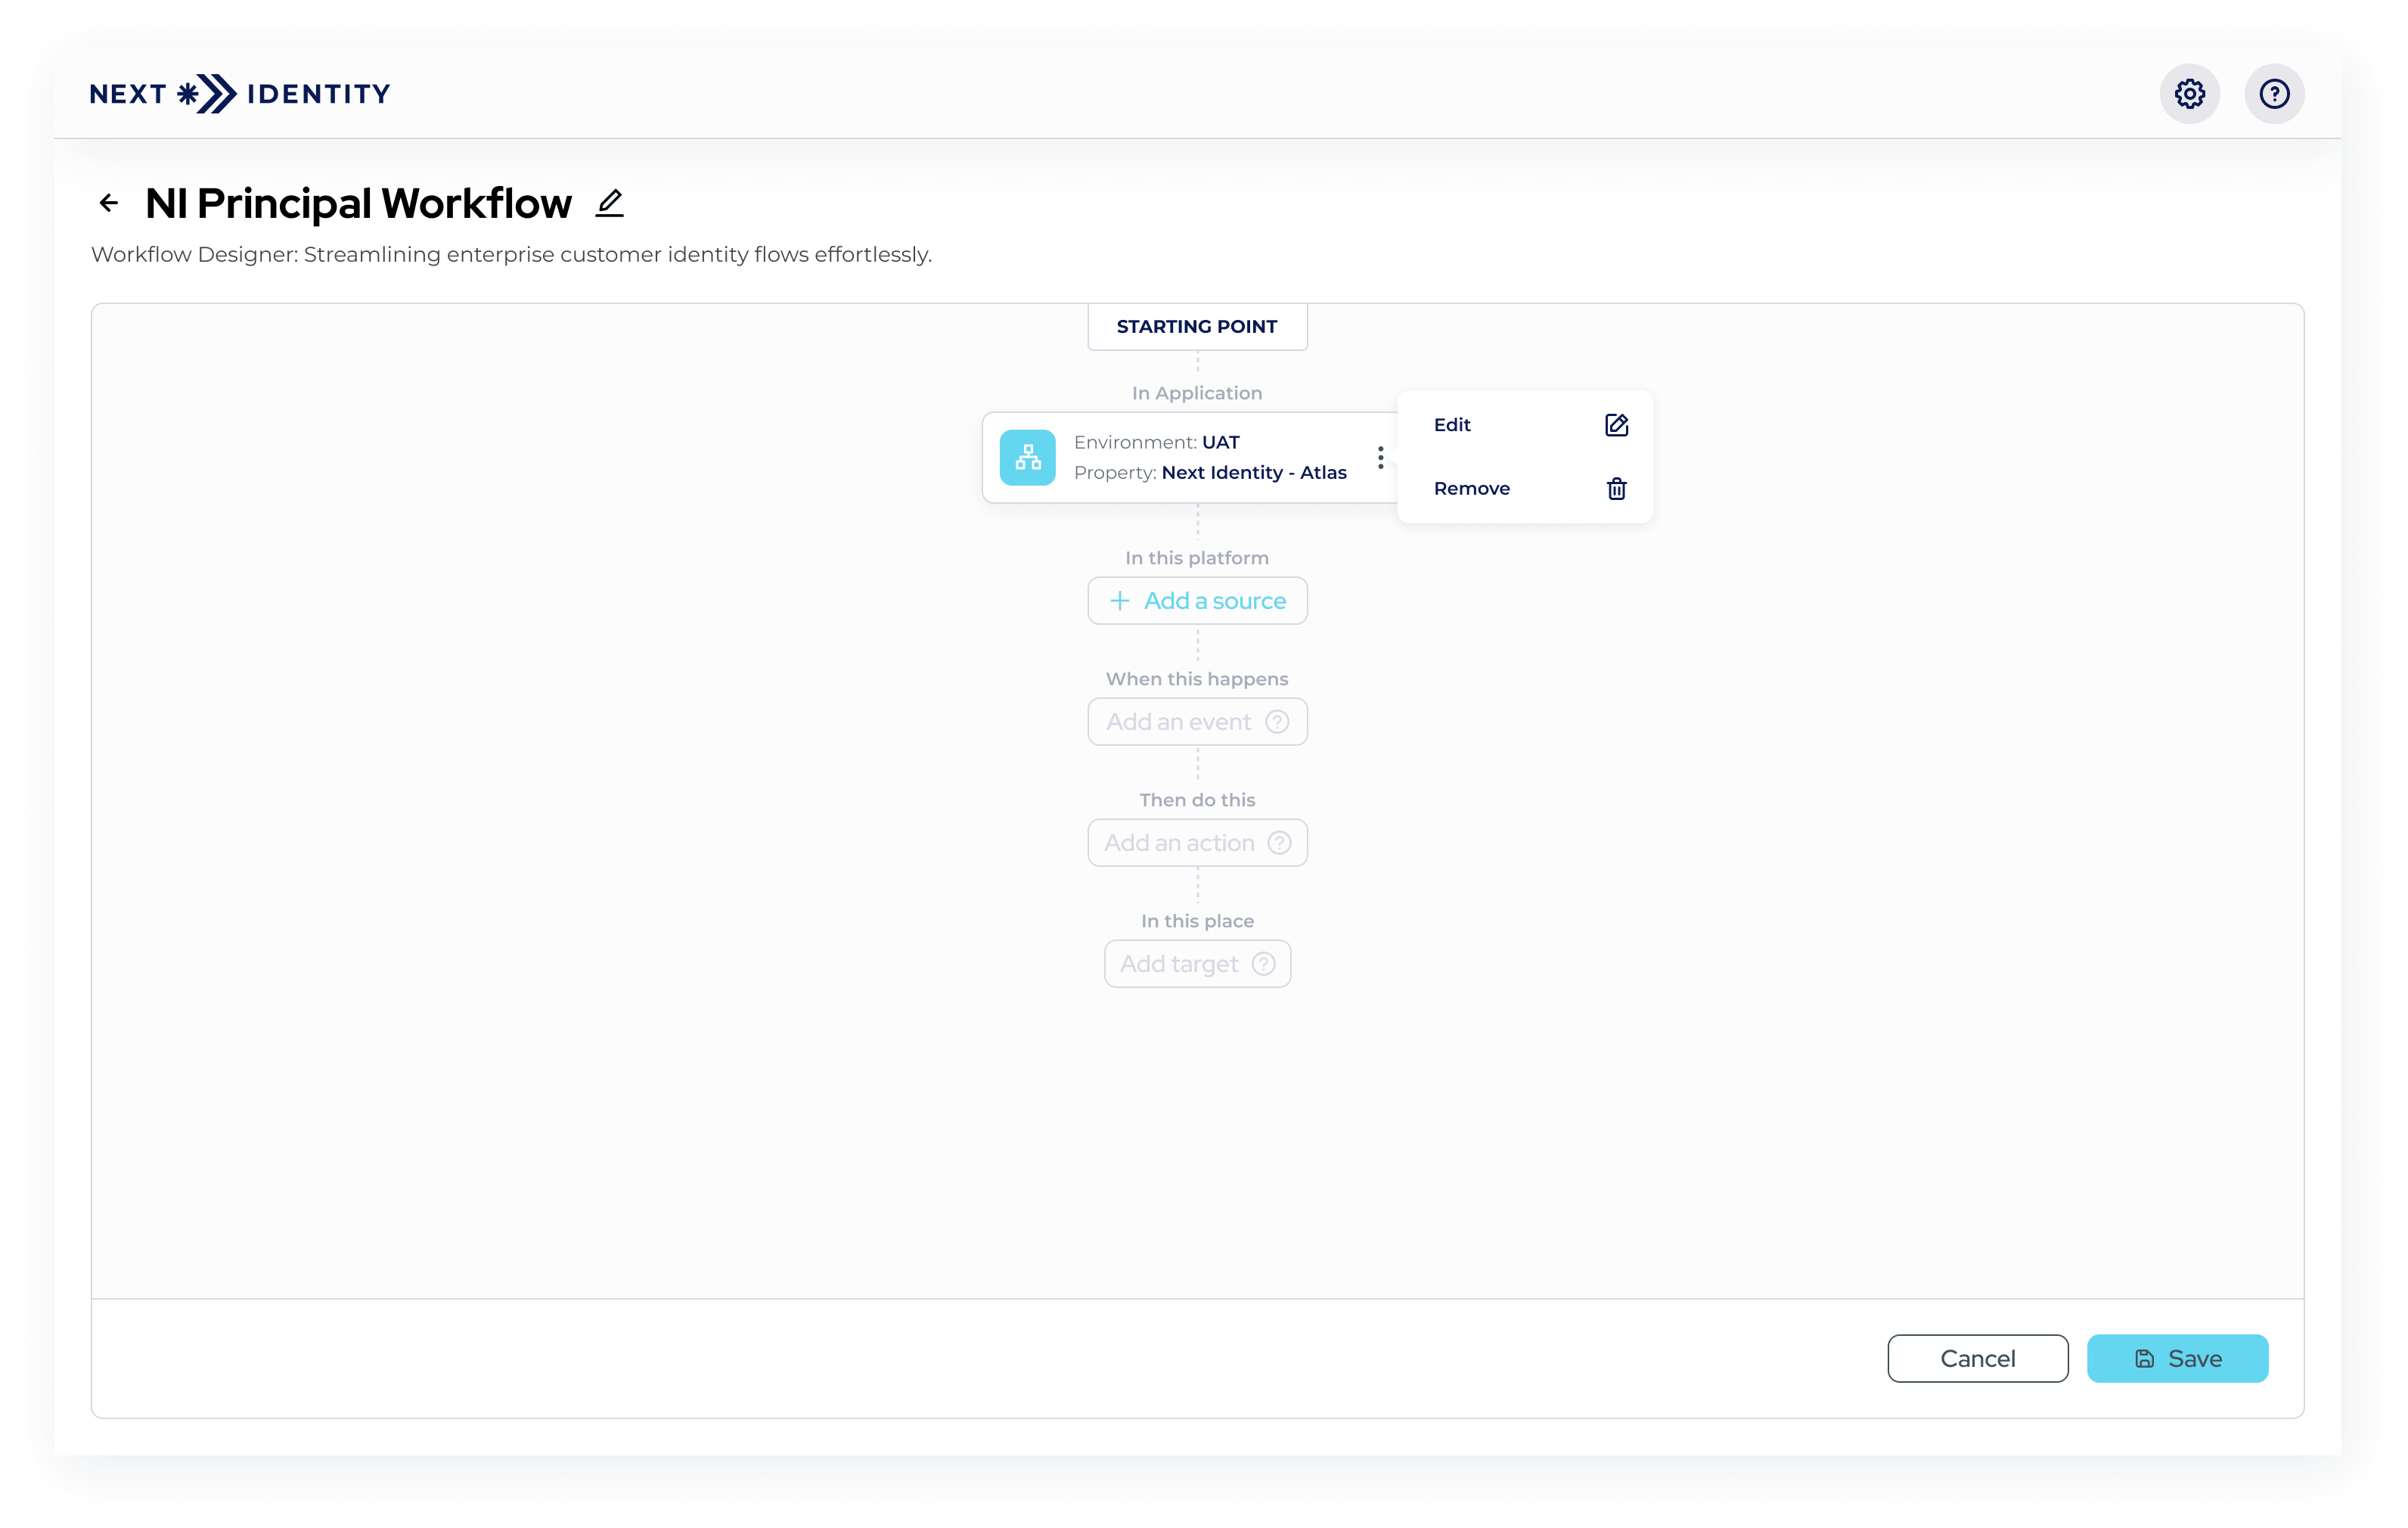 Workflow Designer Screen - Starting Point